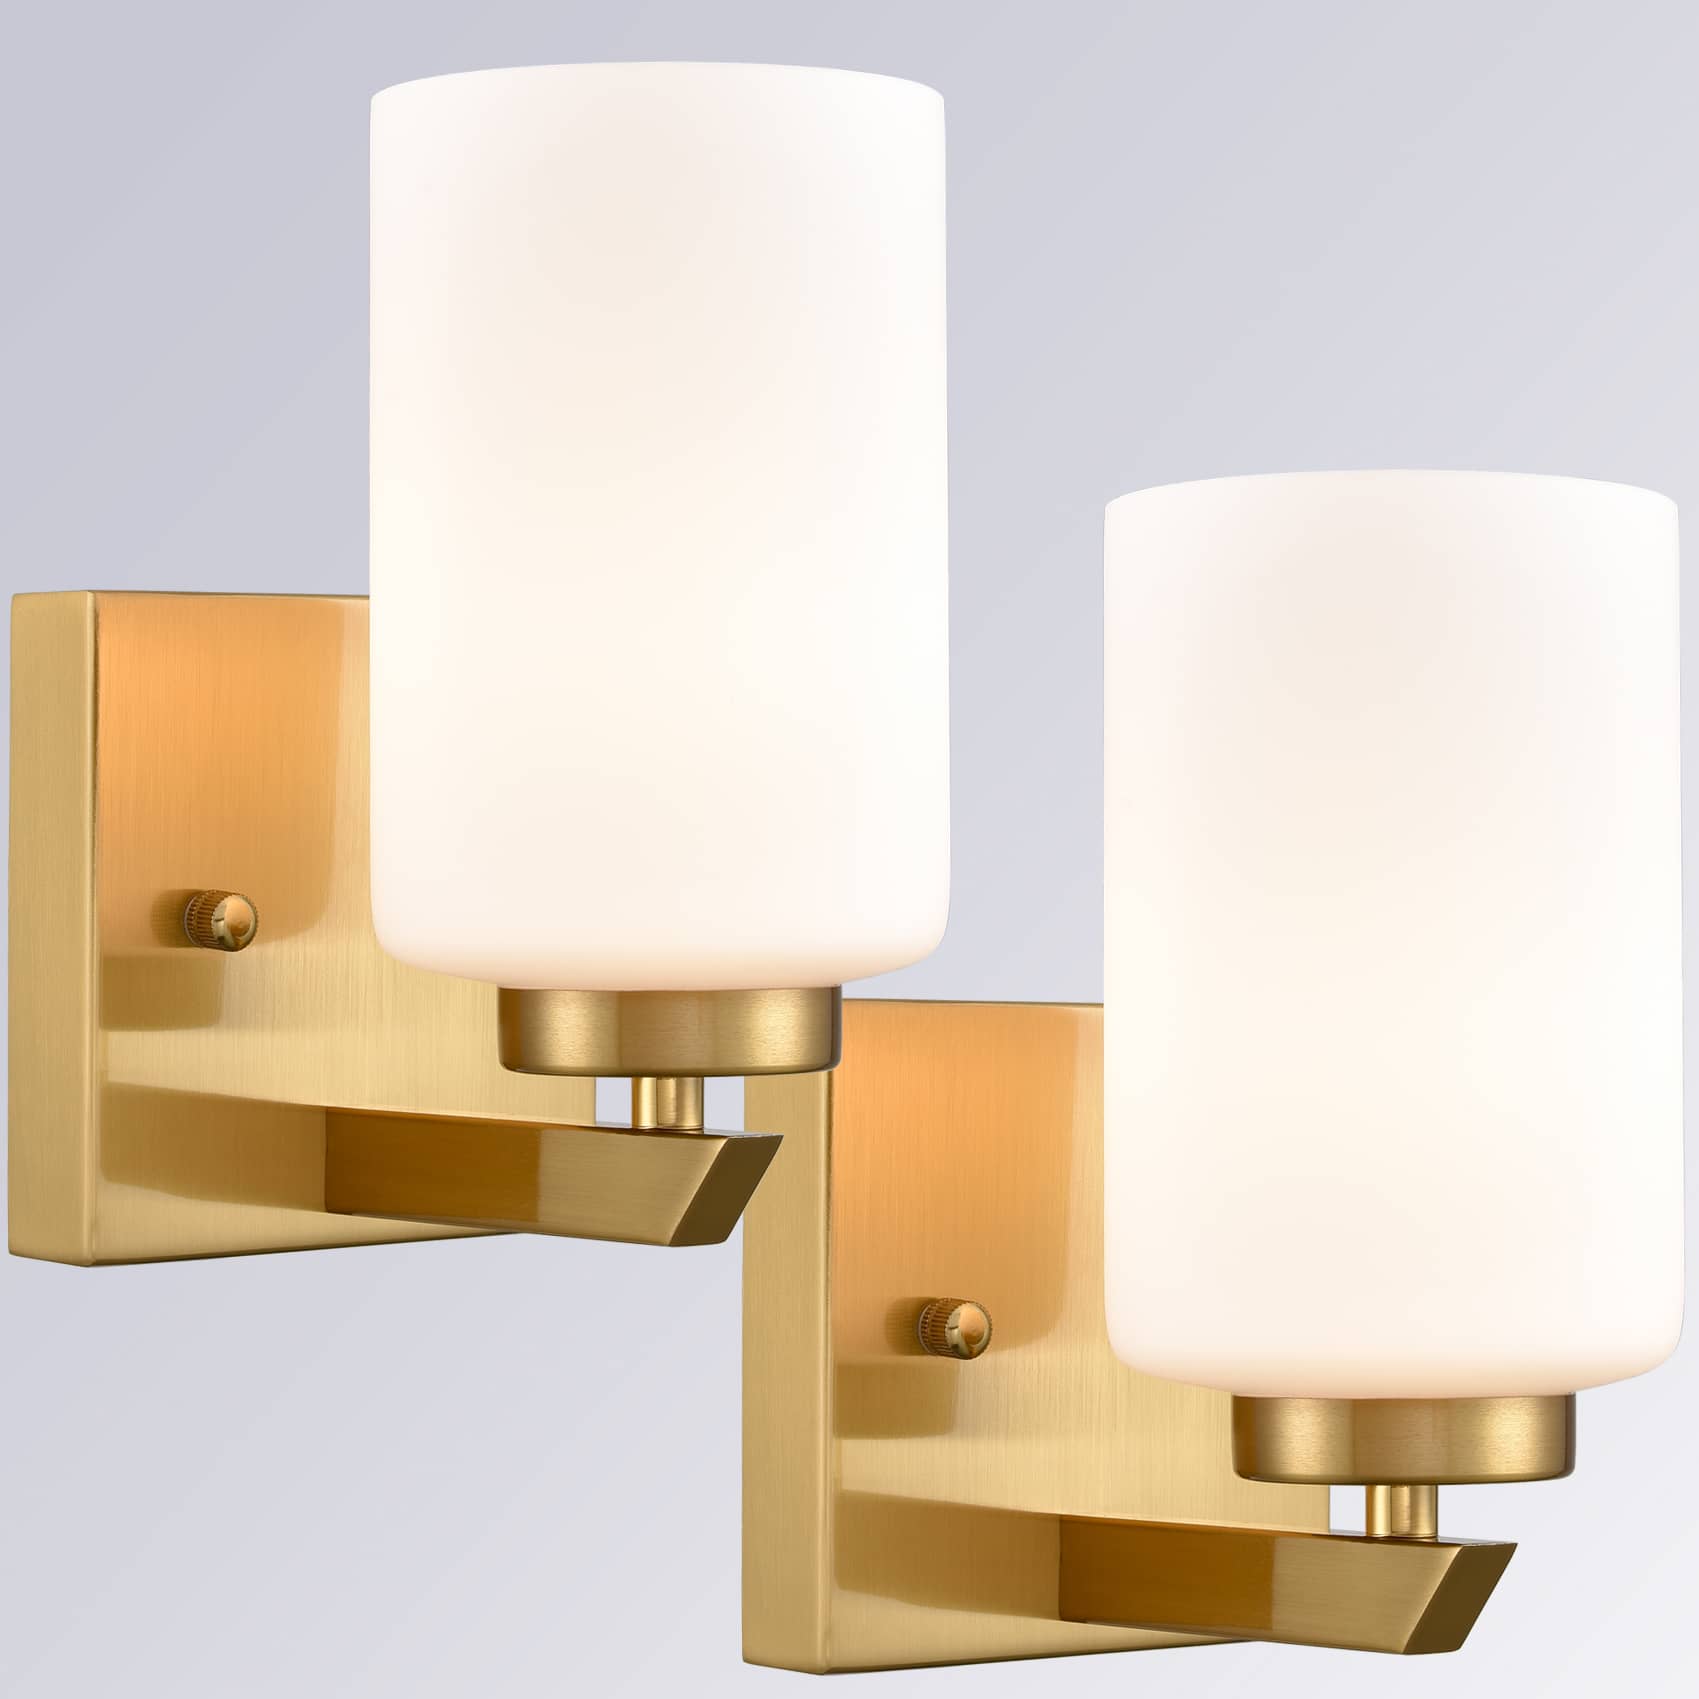 Opal Glass Cylinder Bathroom Wall Sconces Set of 2 Gold